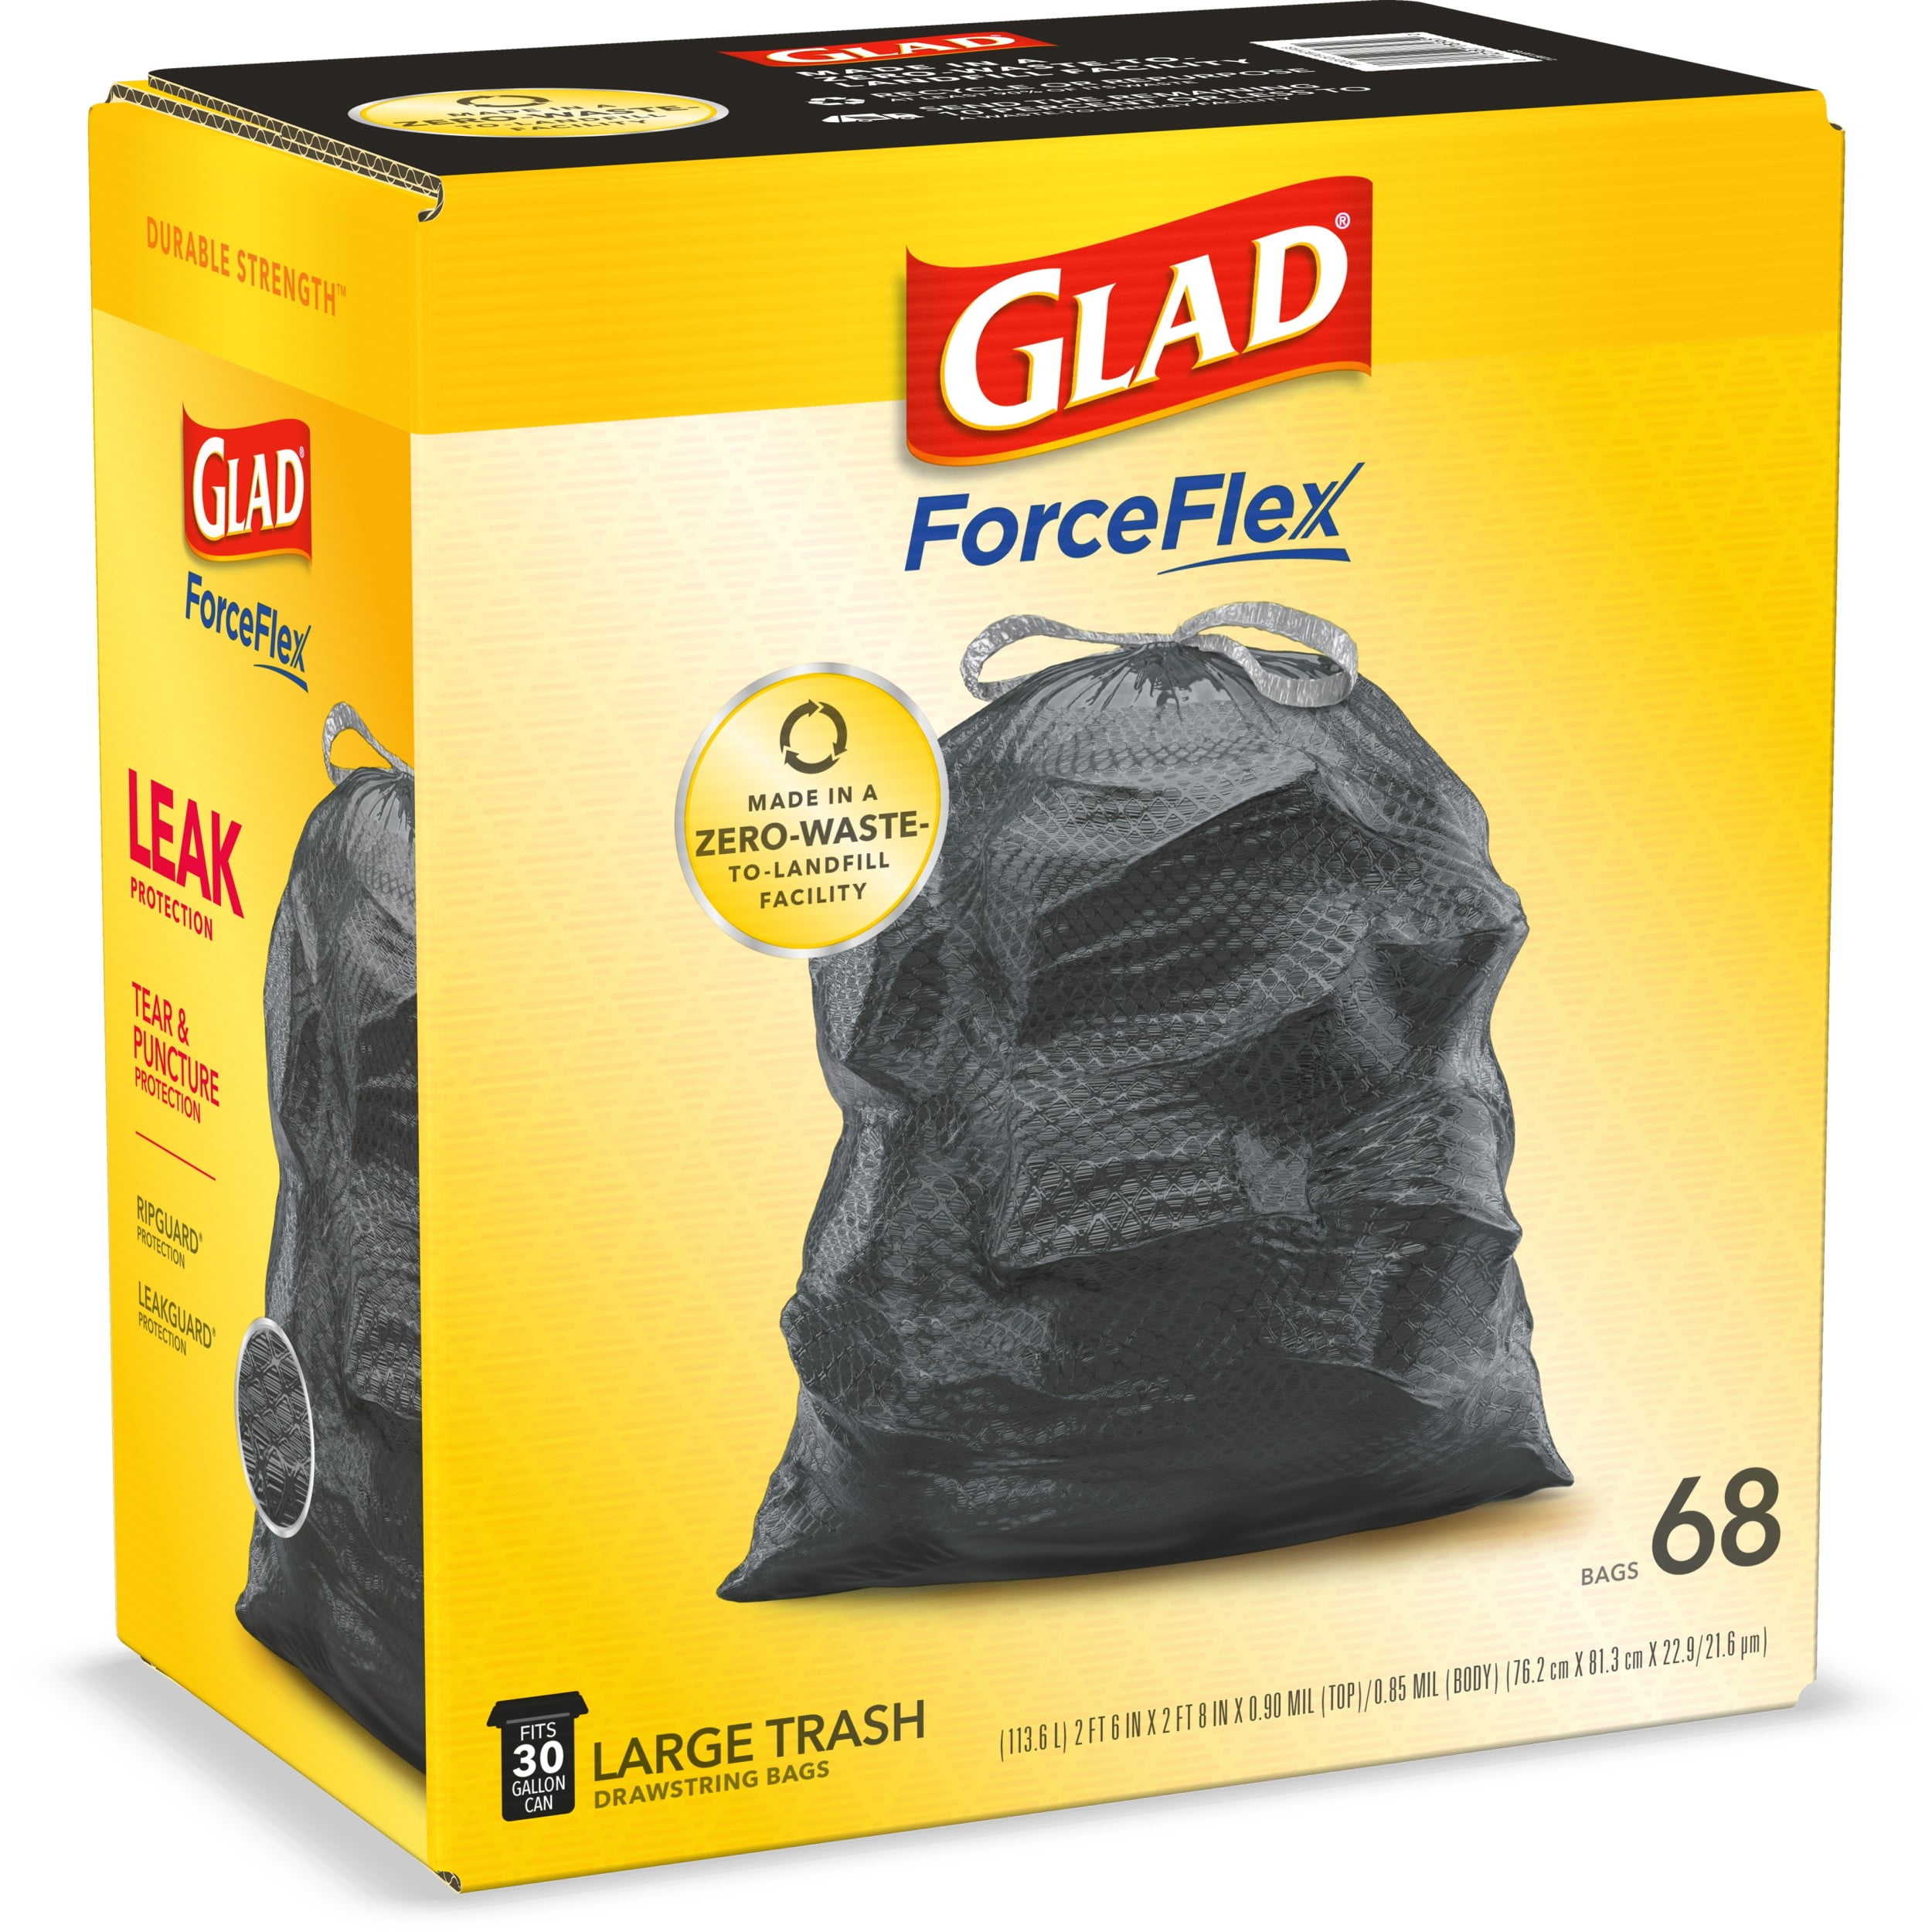 Glad ForceFlex Large Trash Bags, 30 Gallon, 68 Bags 